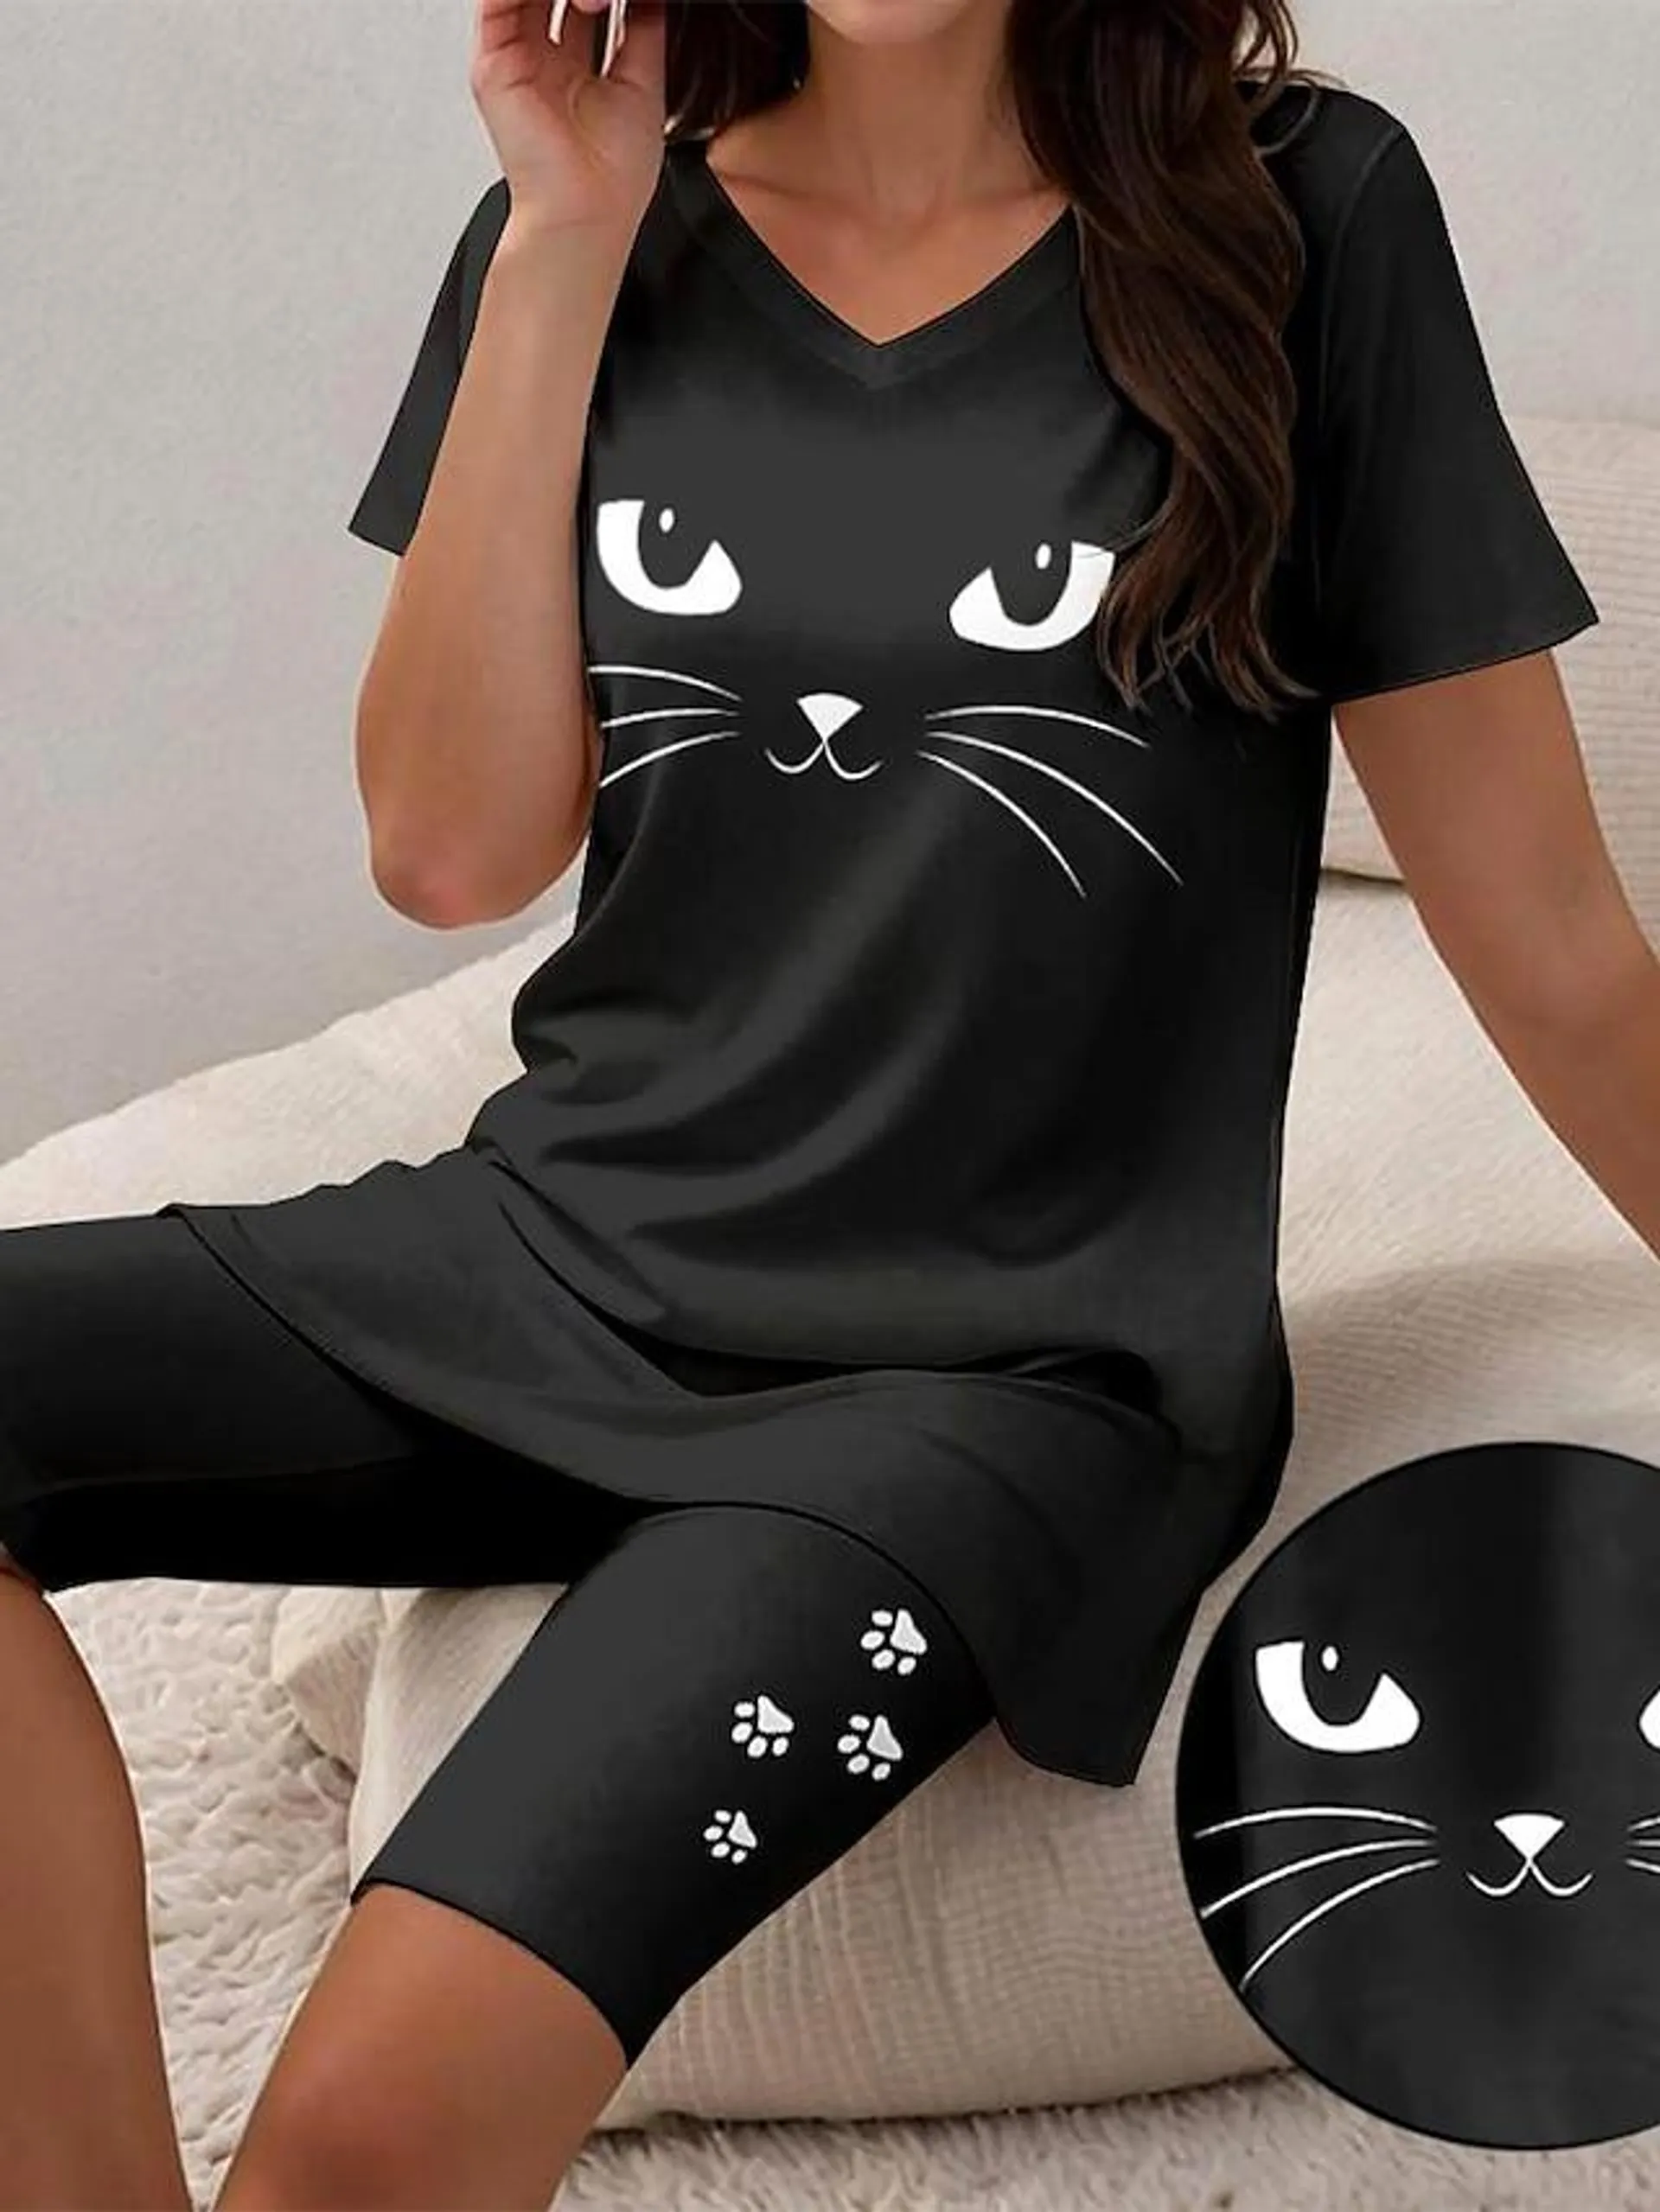 Women's T shirt Tee Shorts Sets Cat Casual Daily Black White Dark Gray Print Short Sleeve Fashion V Neck Regular Fit Summer